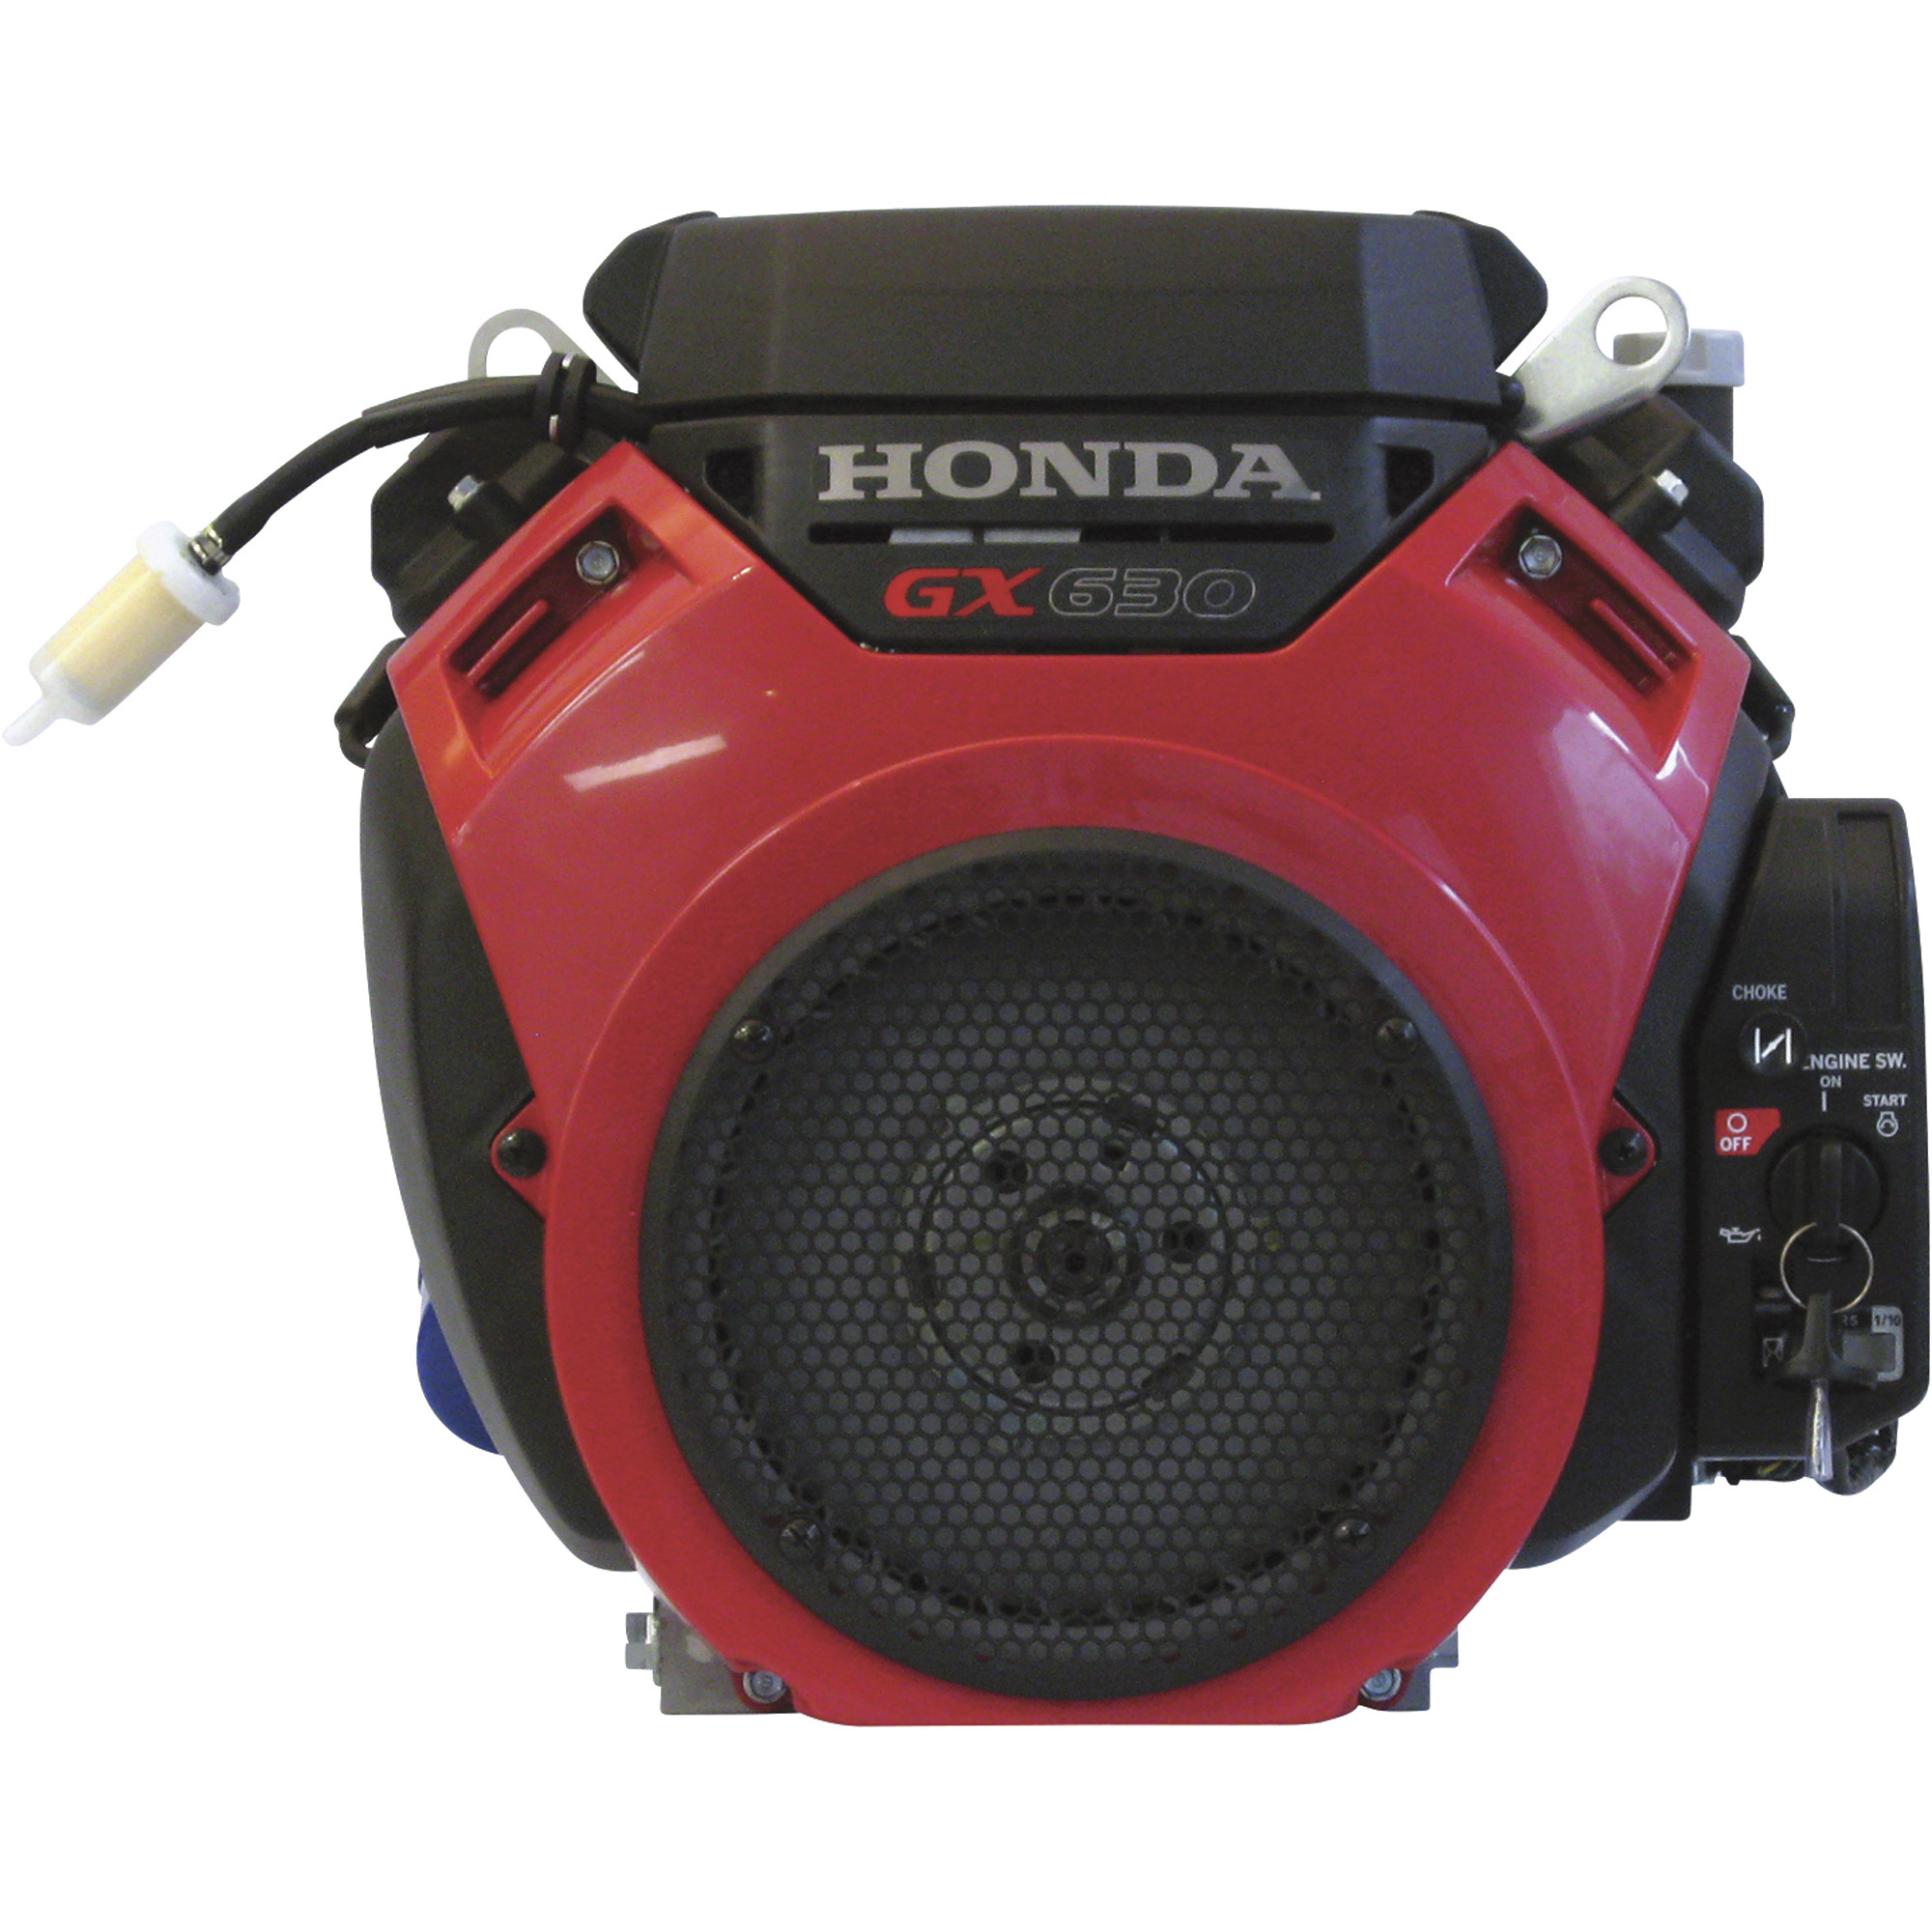 Honda V-Twin Horizontal OHV Engine with Electric Start â 688cc, GX Series, Model GX630RHVXE1